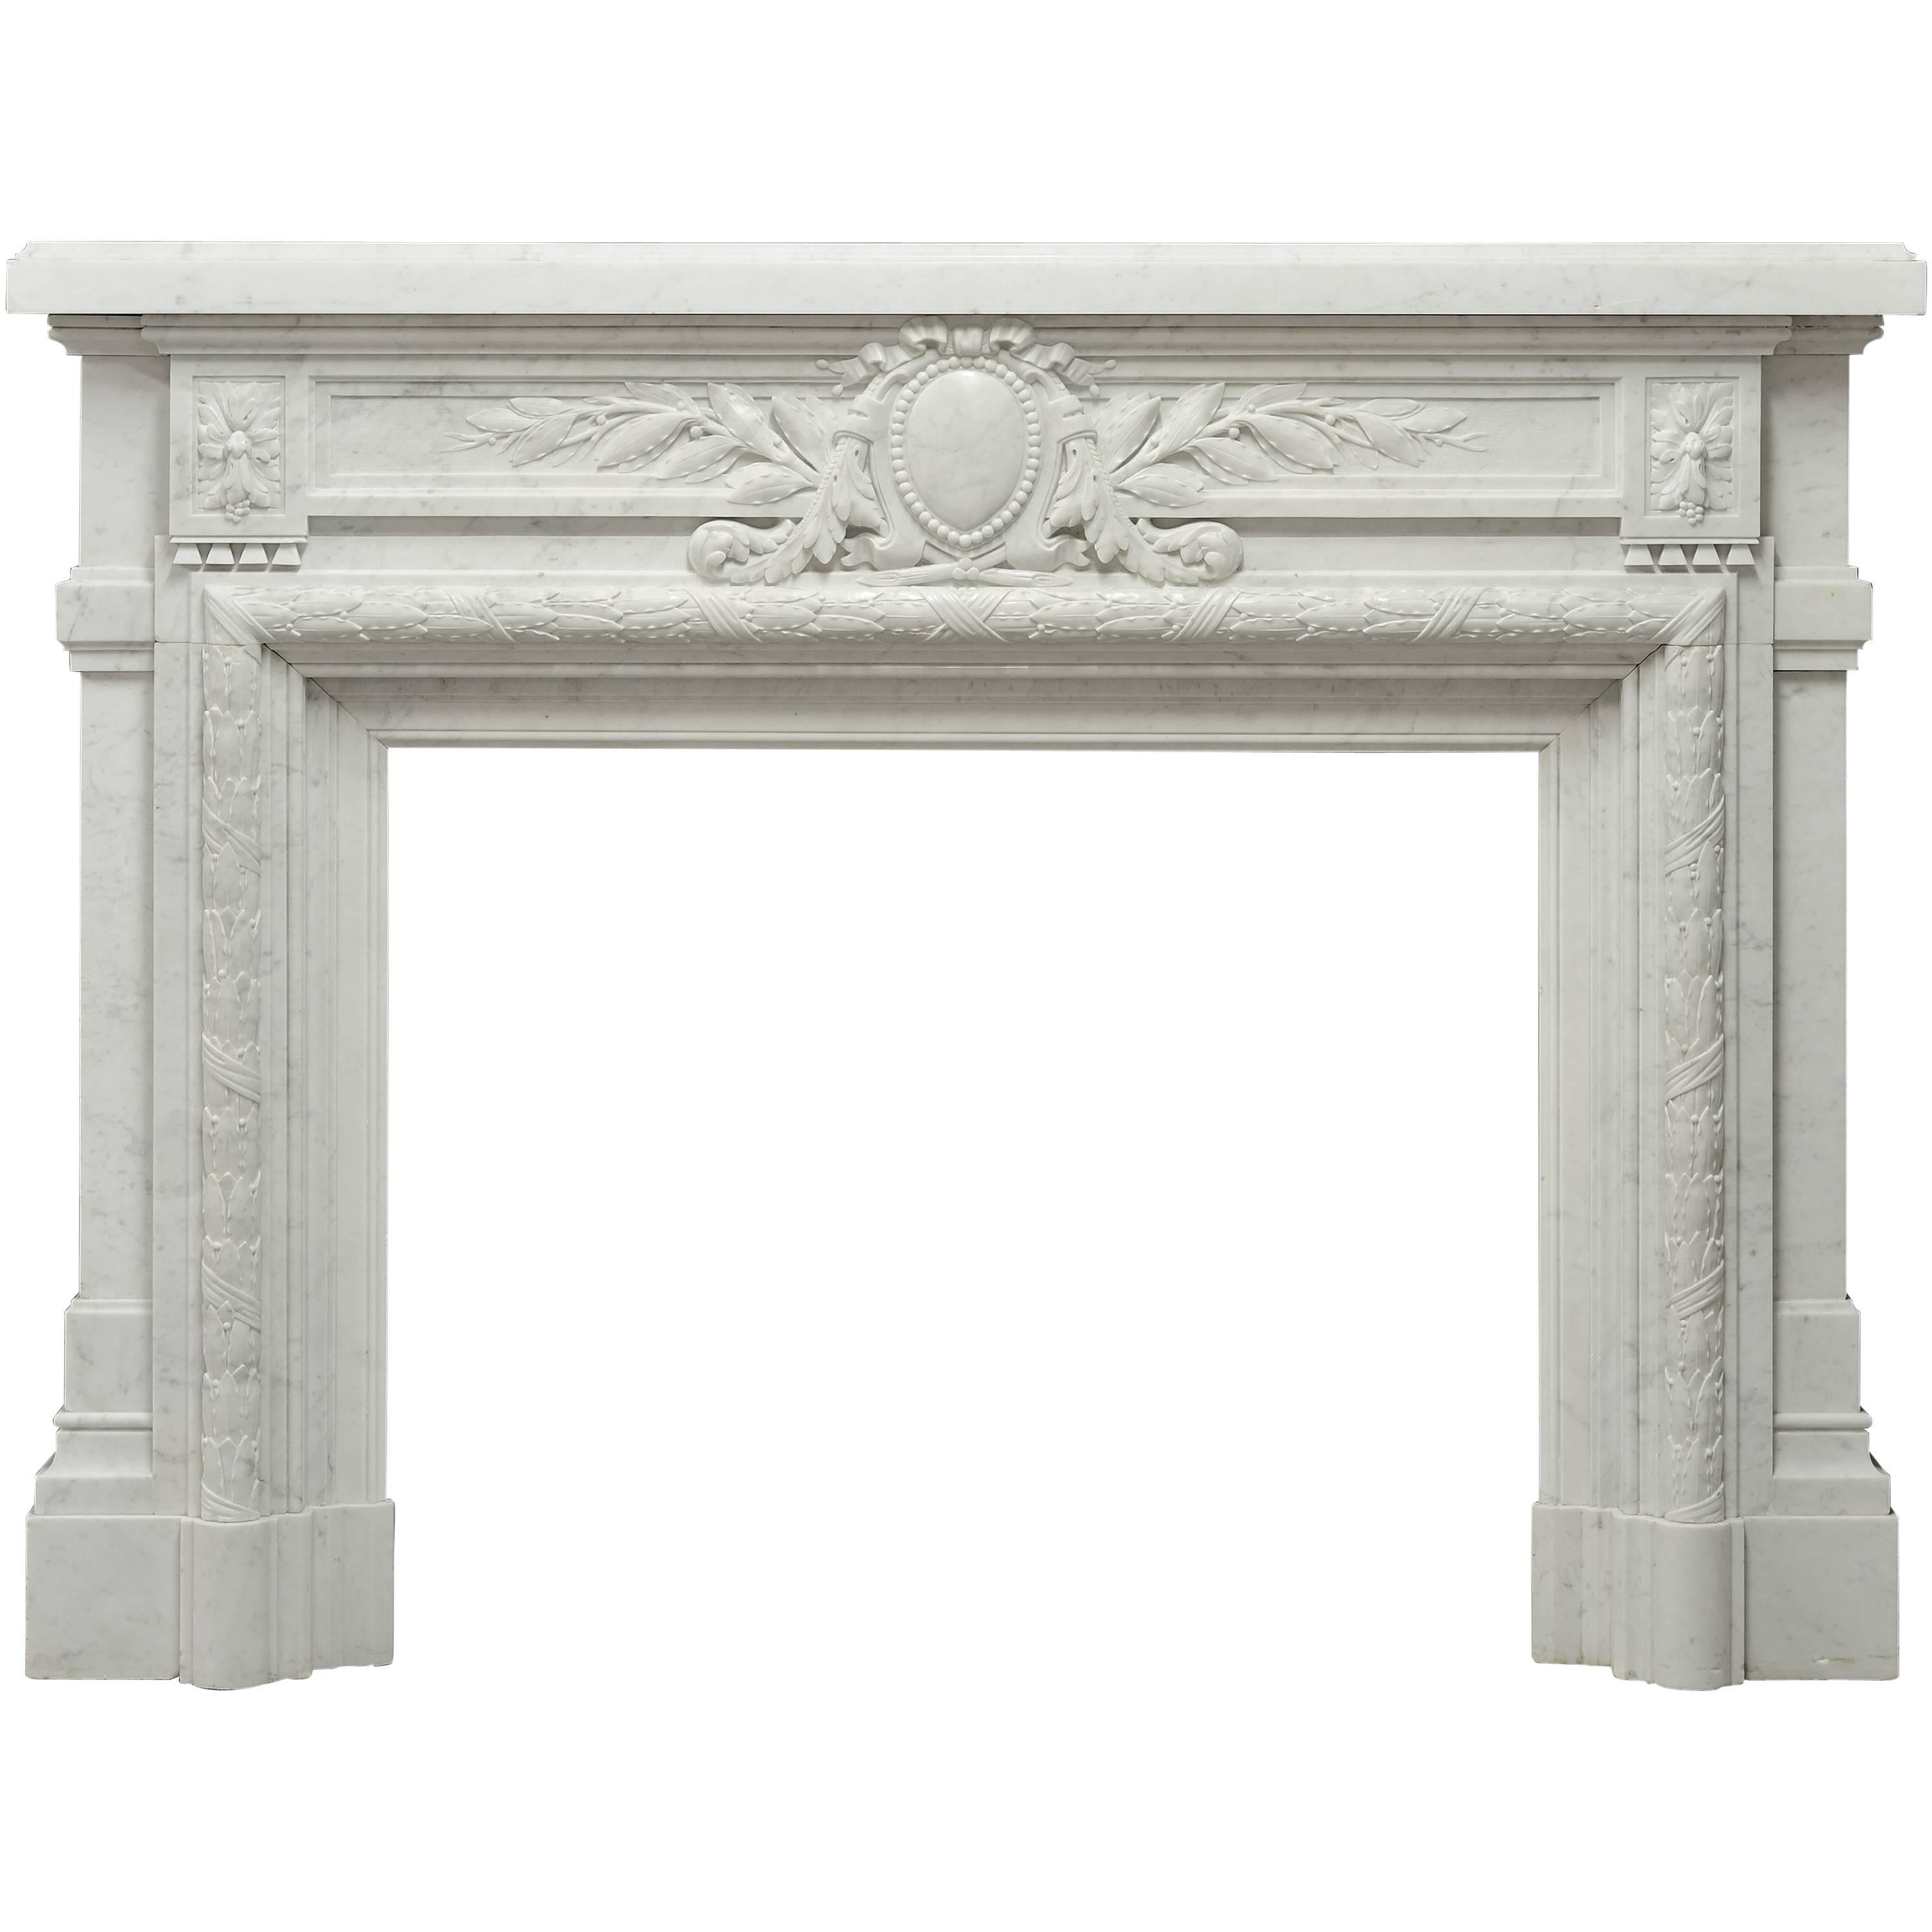 - Monumental - Antique French Louis XVI Fireplace Mantel in Carrara White Marble